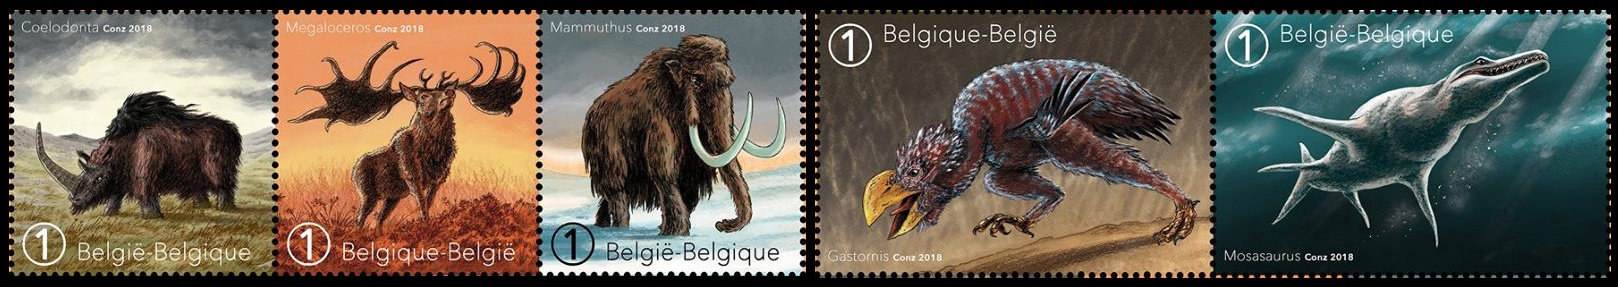 Prehistoric animals on stamps of Belgium 2018